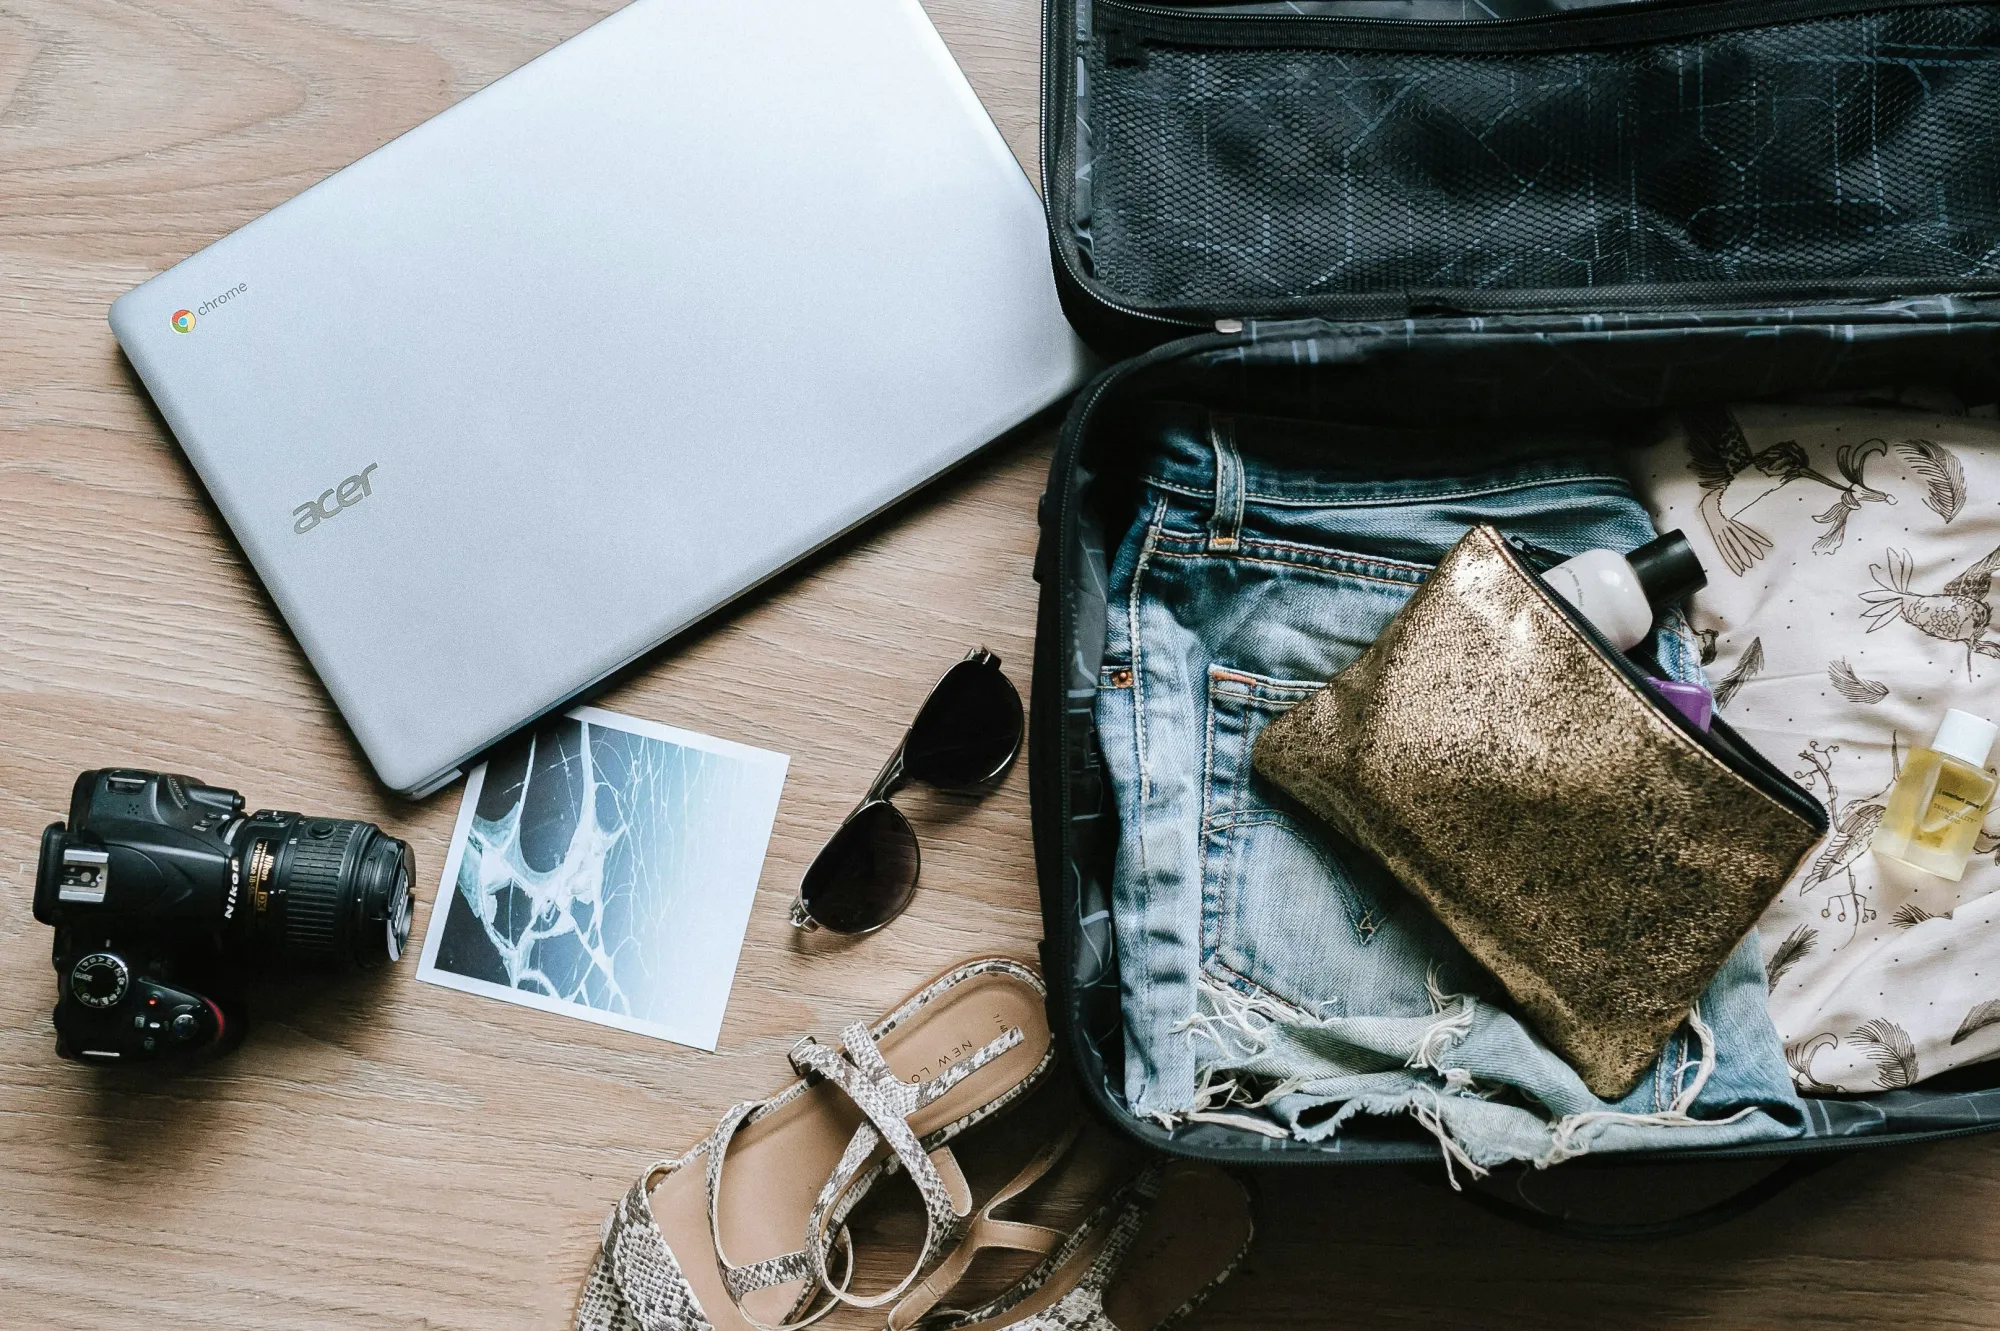 Digital nomad packing tech essentials including travel cameras